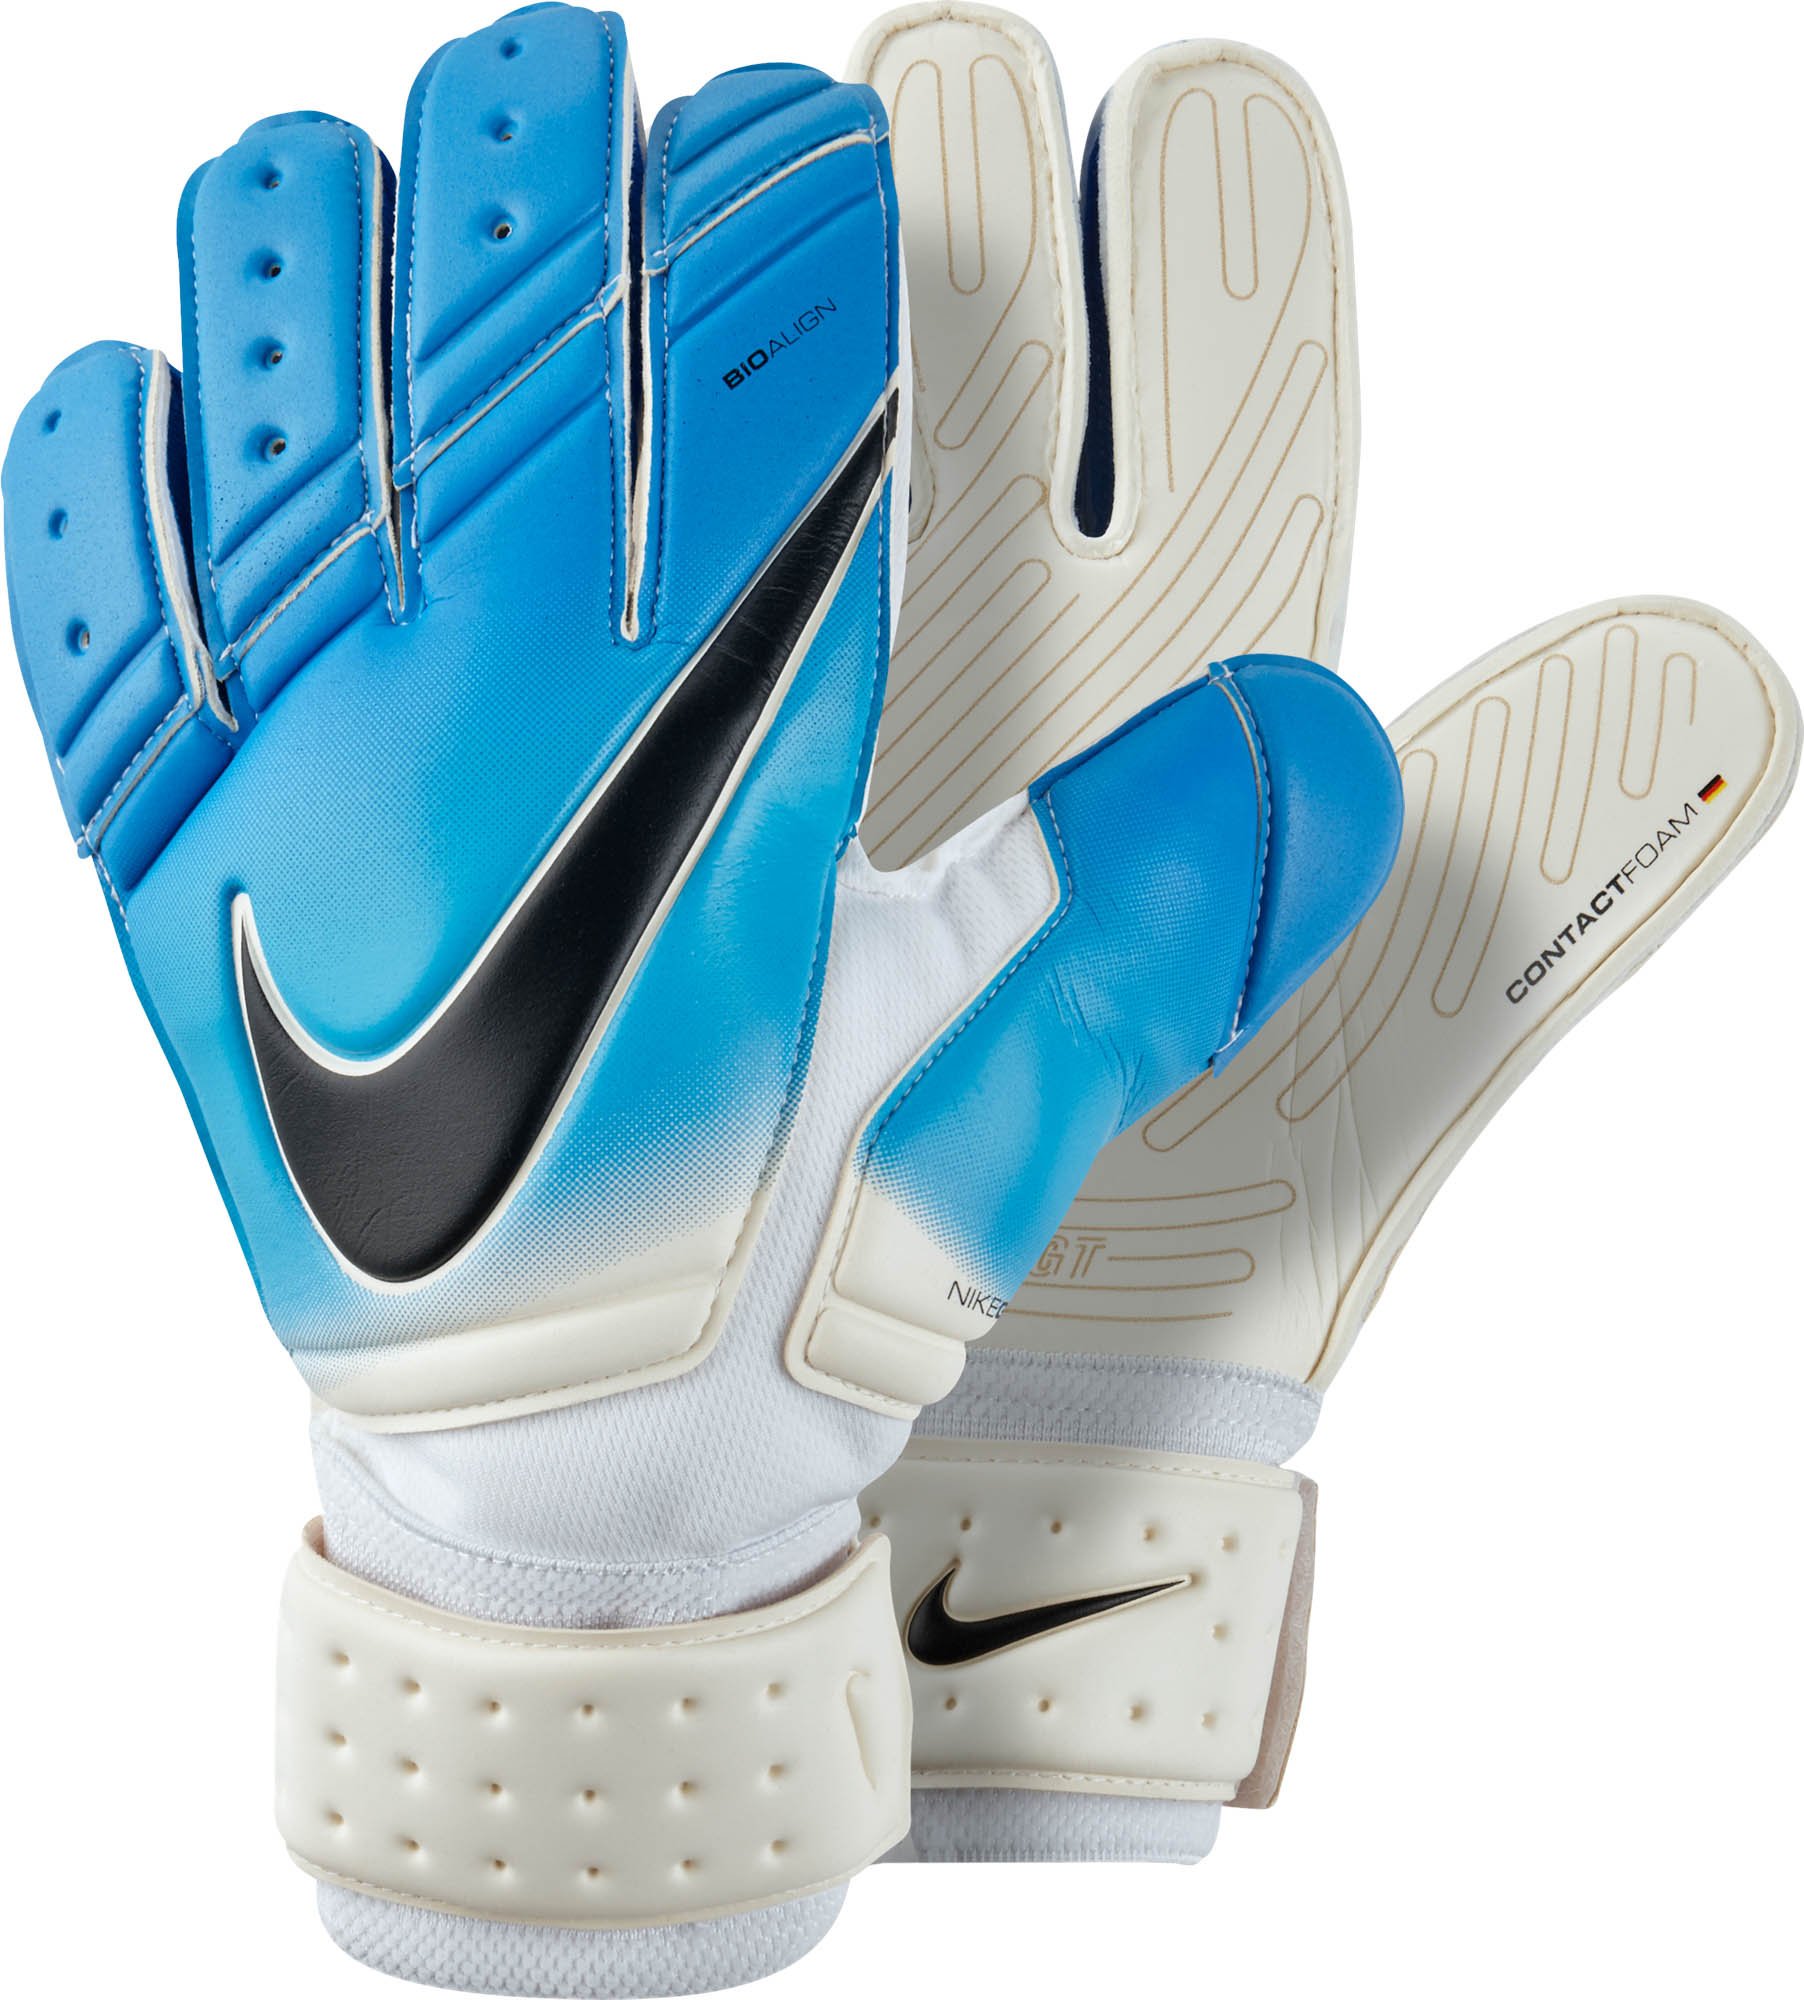 sgt goalkeeper gloves